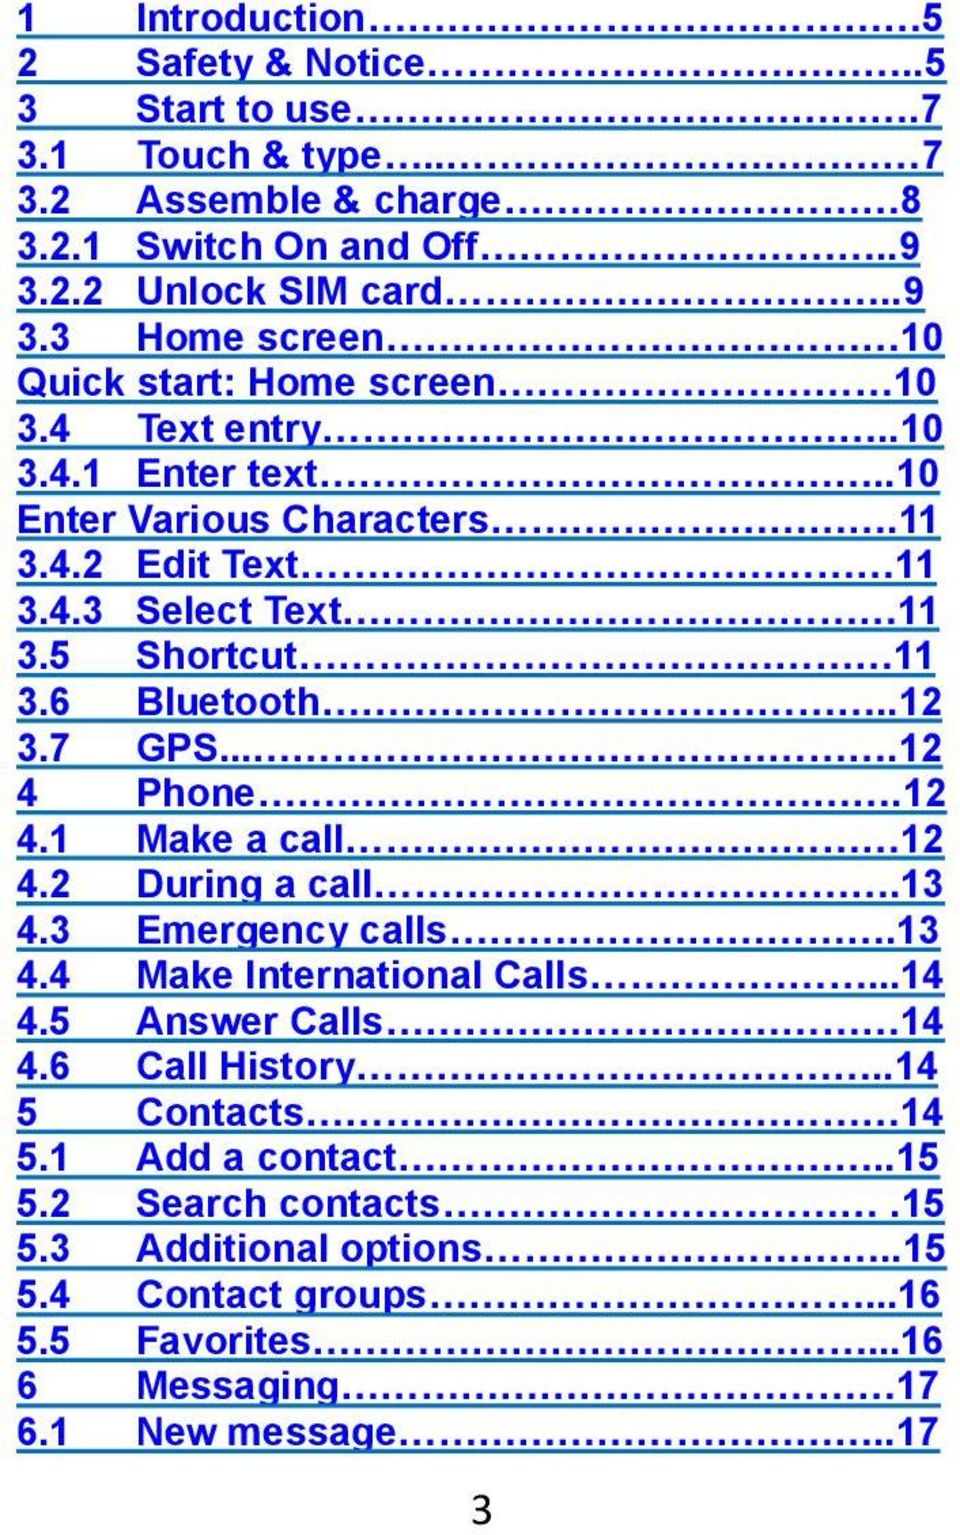 5 Shortcut 11 3.6 Bluetooth..12 3.7 GPS....12 4 Phone.12 4.1 Make a call 12 4.2 During a call.13 4.3 Emergency calls.13 4.4 Make International Calls...14 4.